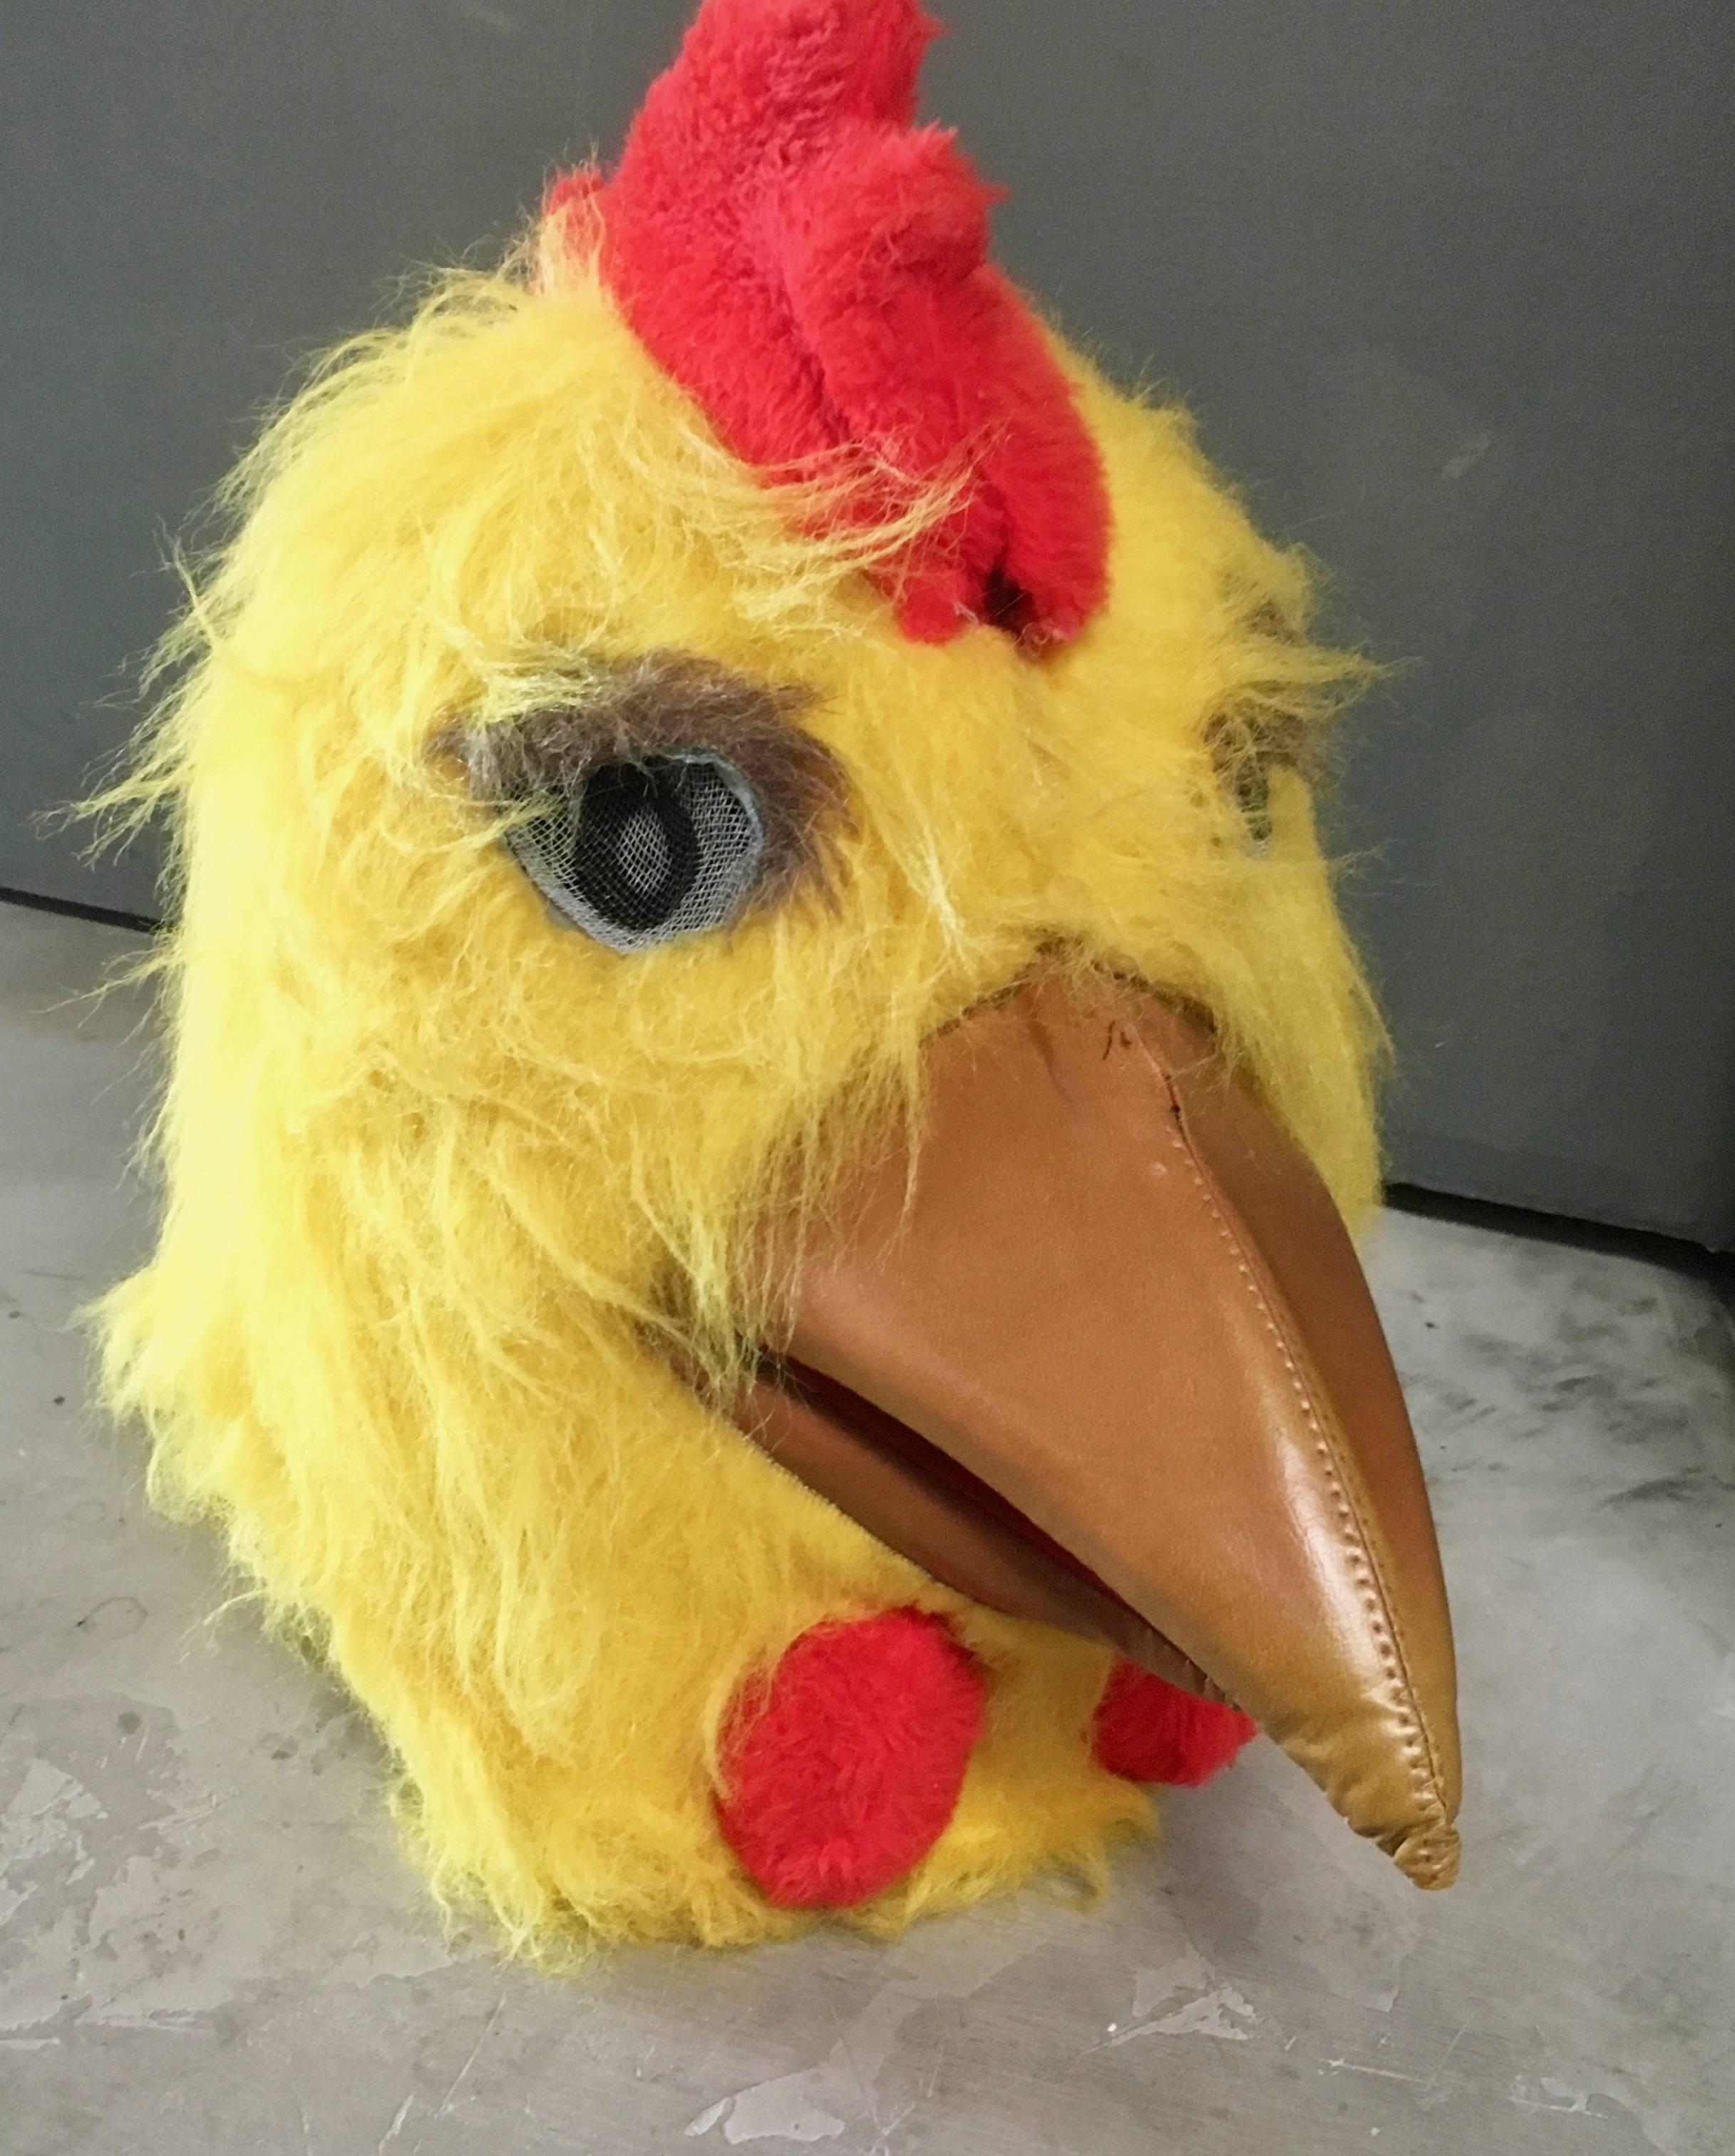 Great Folk Art chicken head mask. Leather beak. Mesh eyes. Great coloring. Fun object and wearable piece of art.